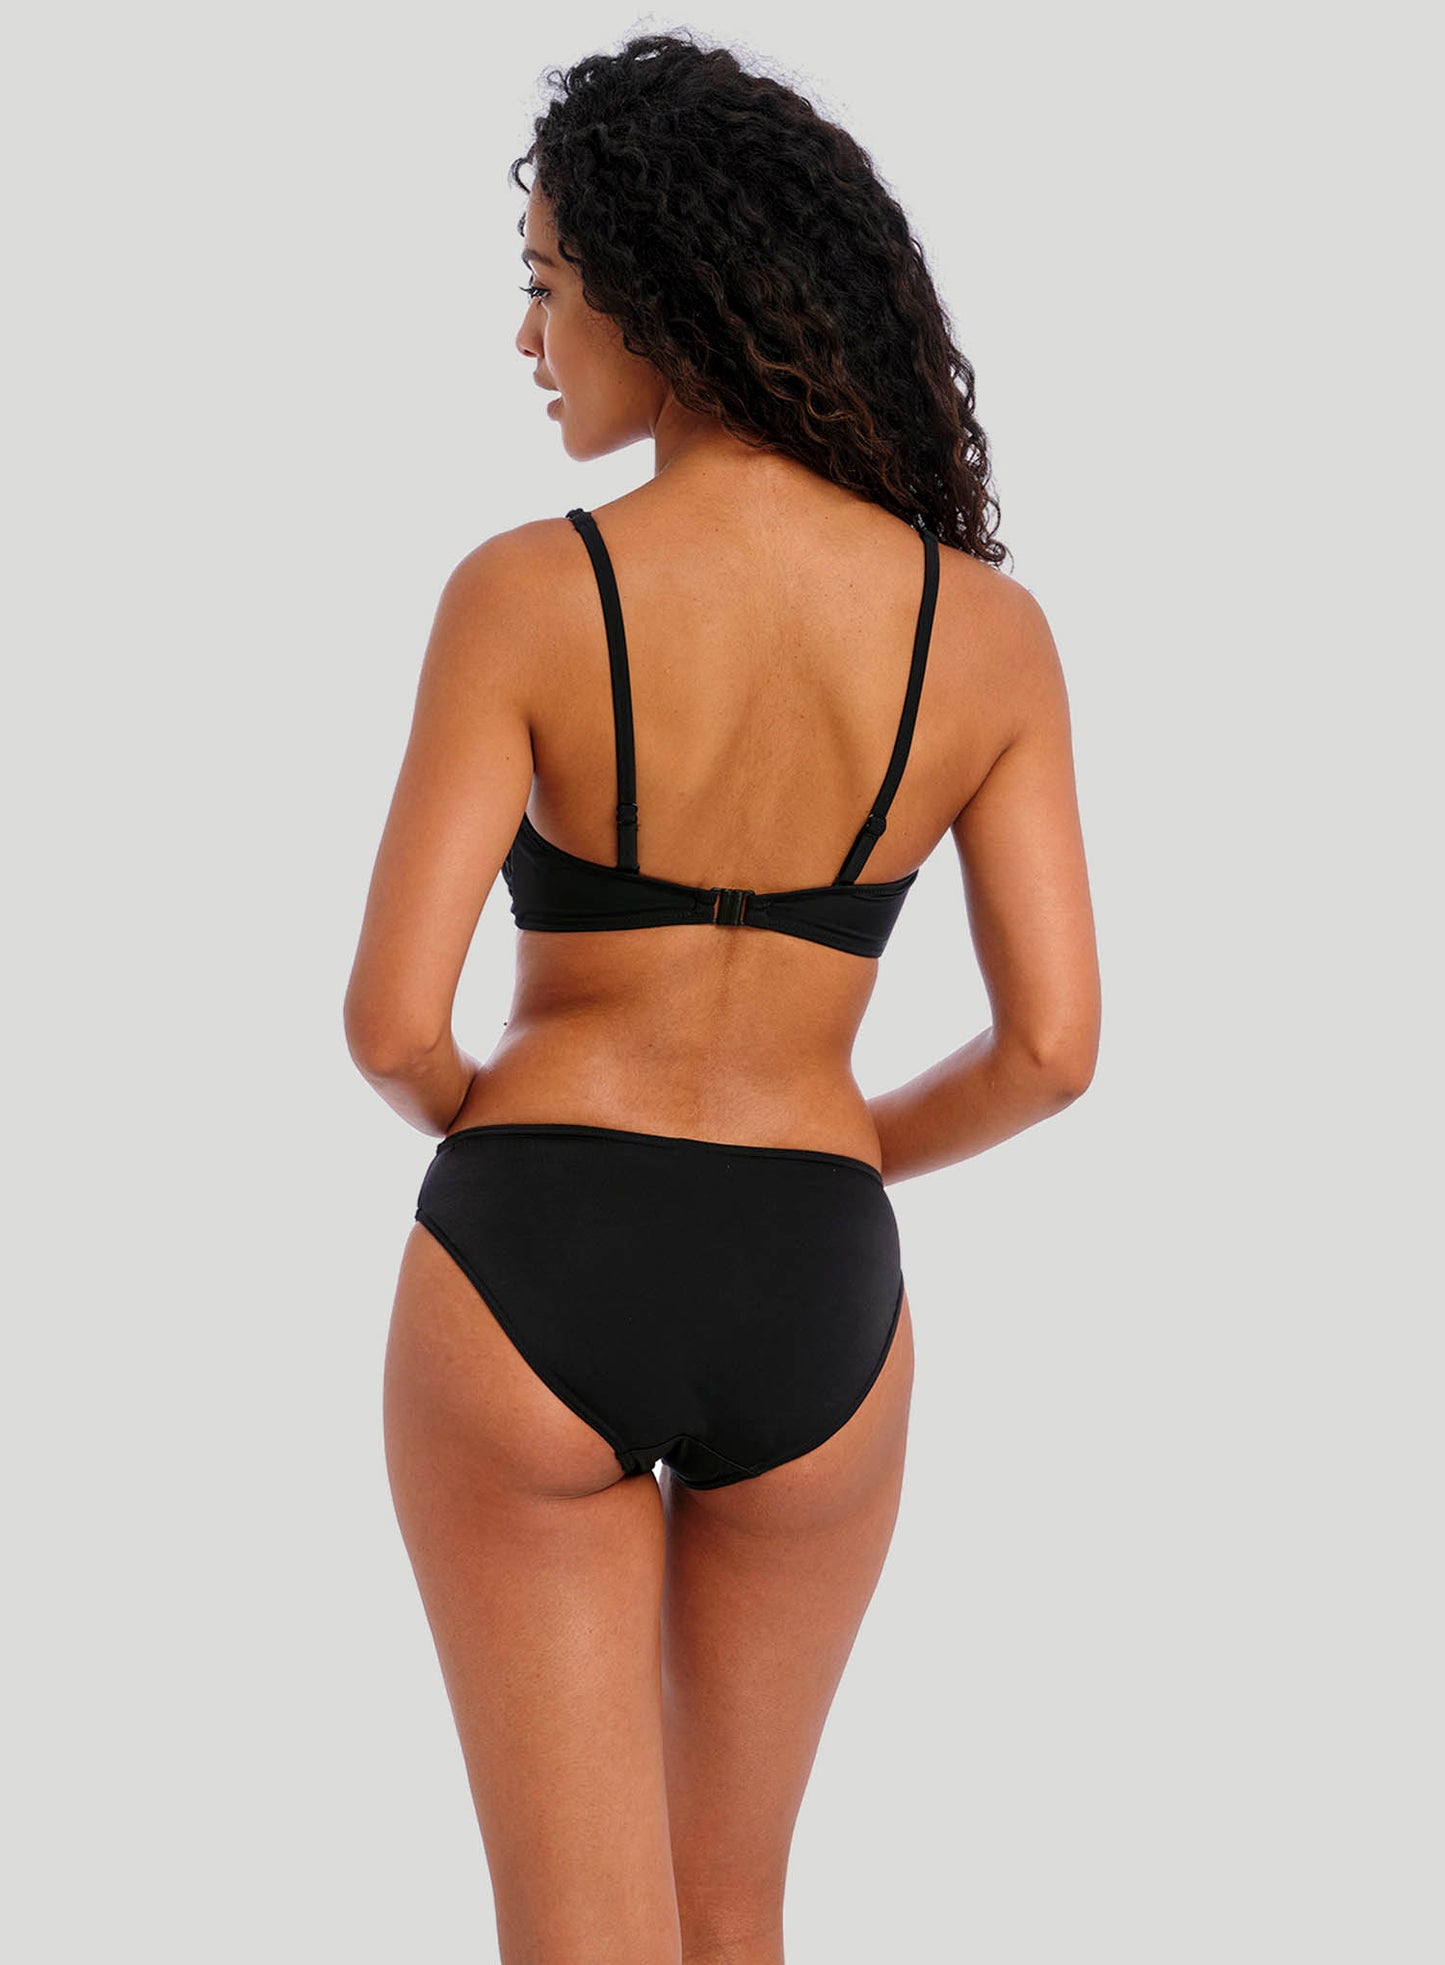 Freya Swimwear: Jewel Cove Bikini Brief Plain Black